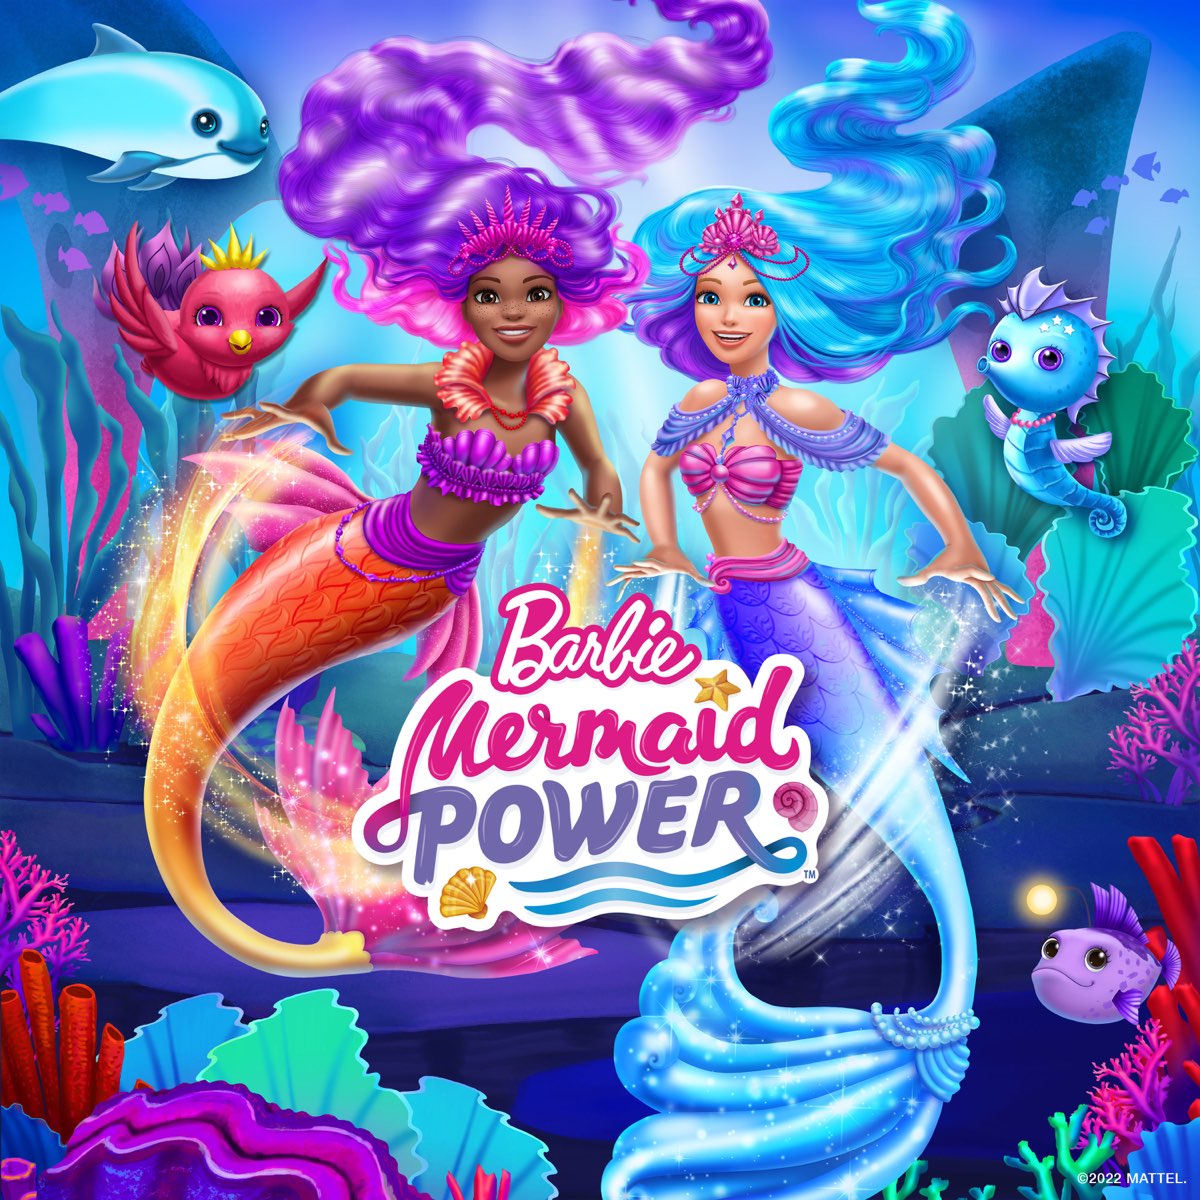 ‎Barbie Mermaid Power (Original Movie Soundtrack) EP by Barbie on